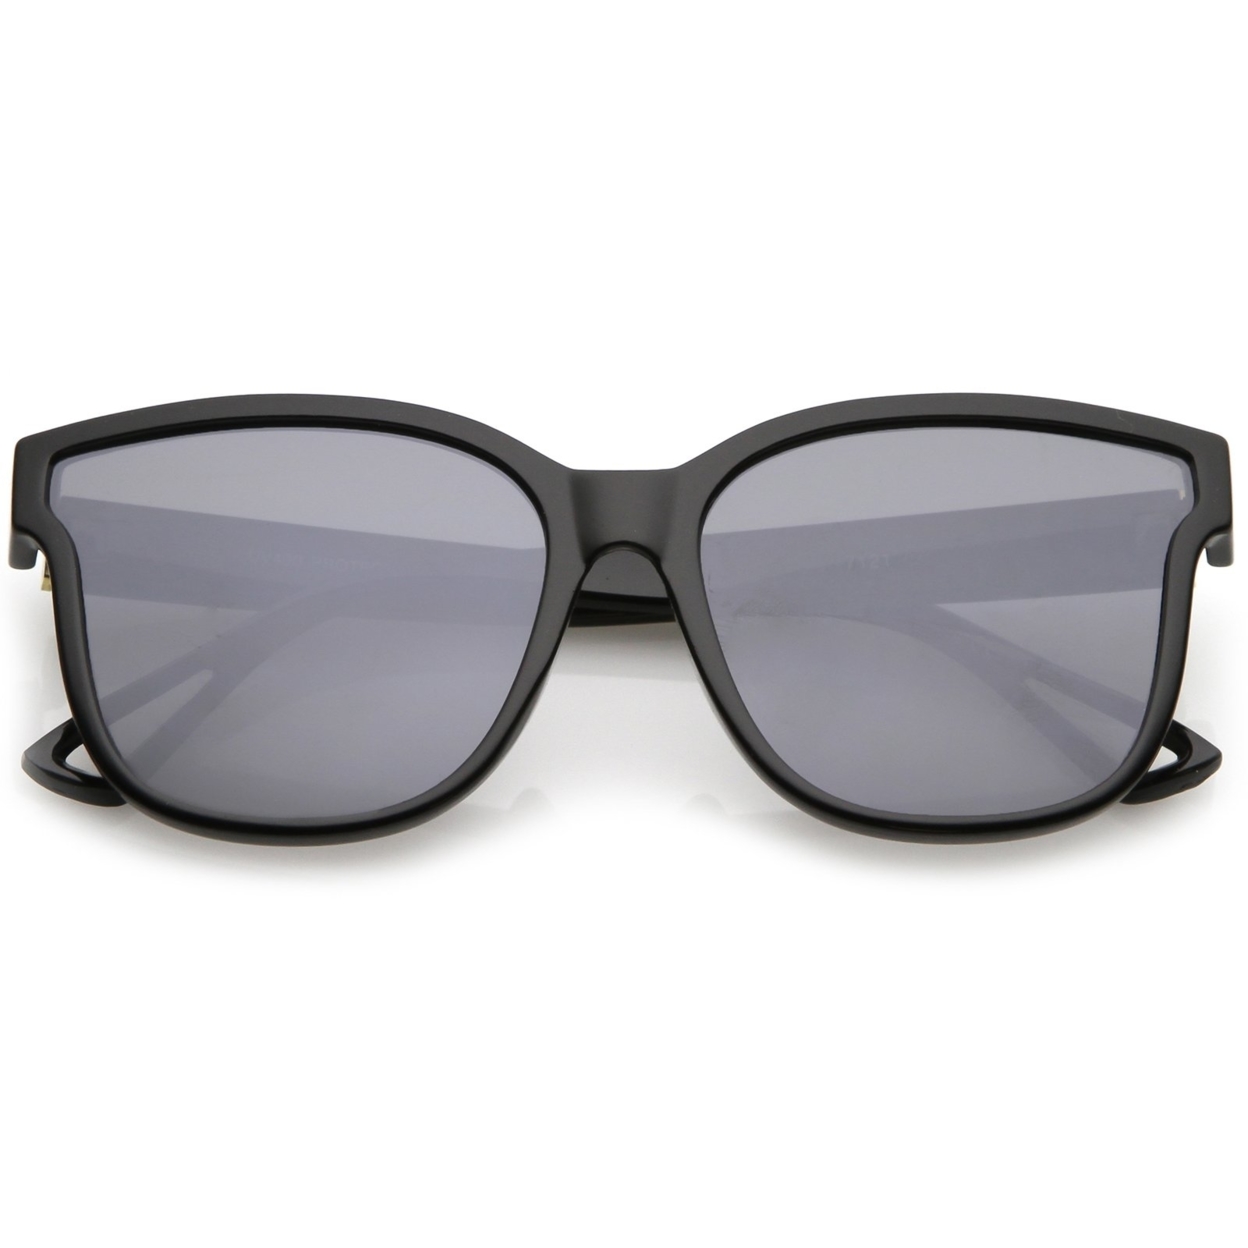 Women's Horn Rim Metal Accent Square Flat Lens Cat Eye Sunglasses 55mm - Matte Black / Smoke